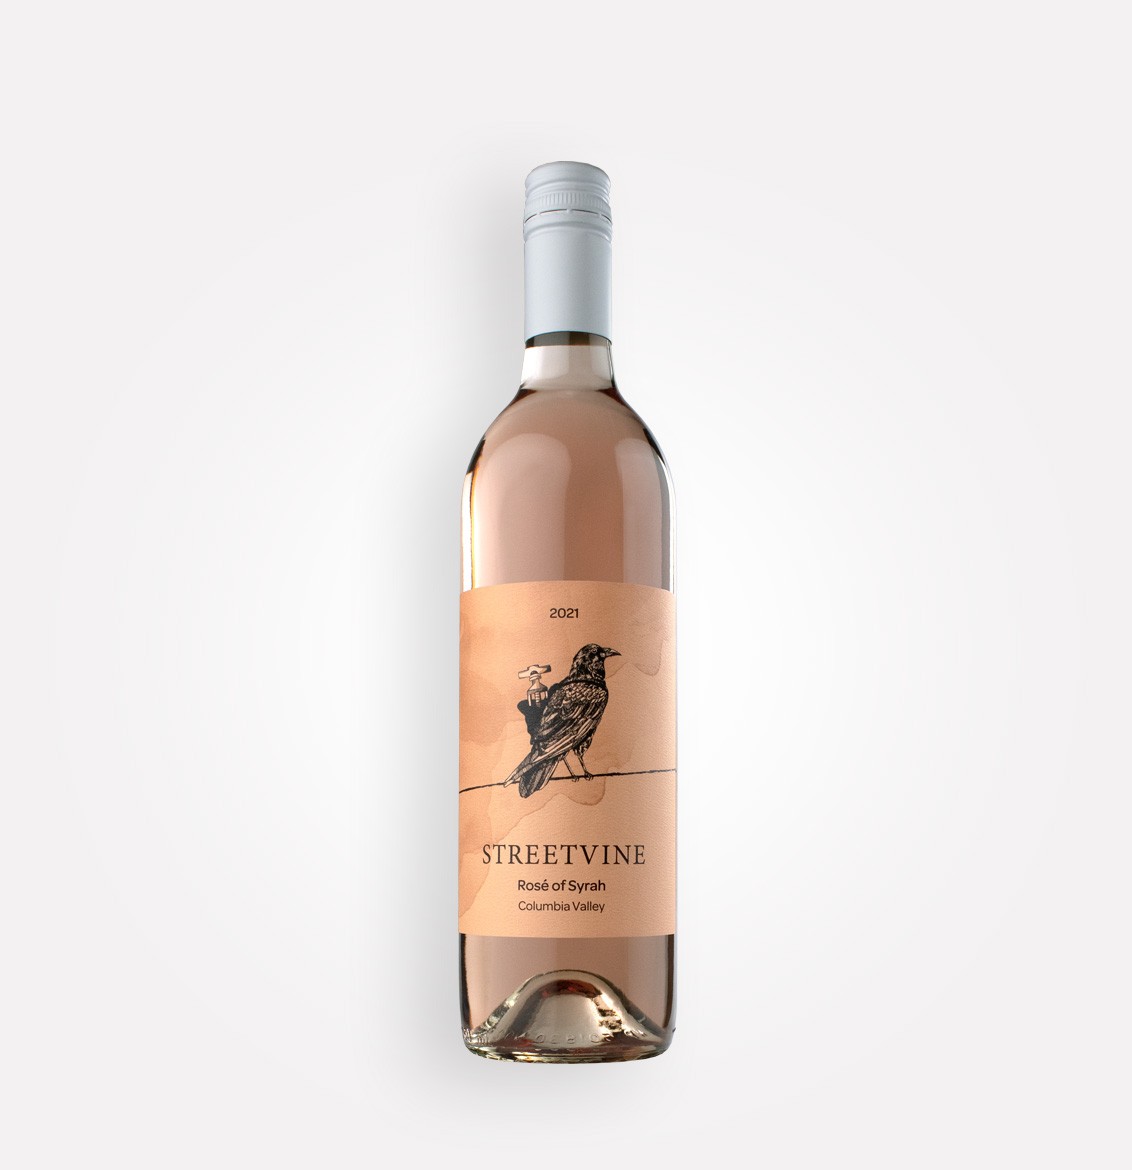 Bottle of Streetvine 2021 Rosé of Syrah wine from Washington's Columbia Valley